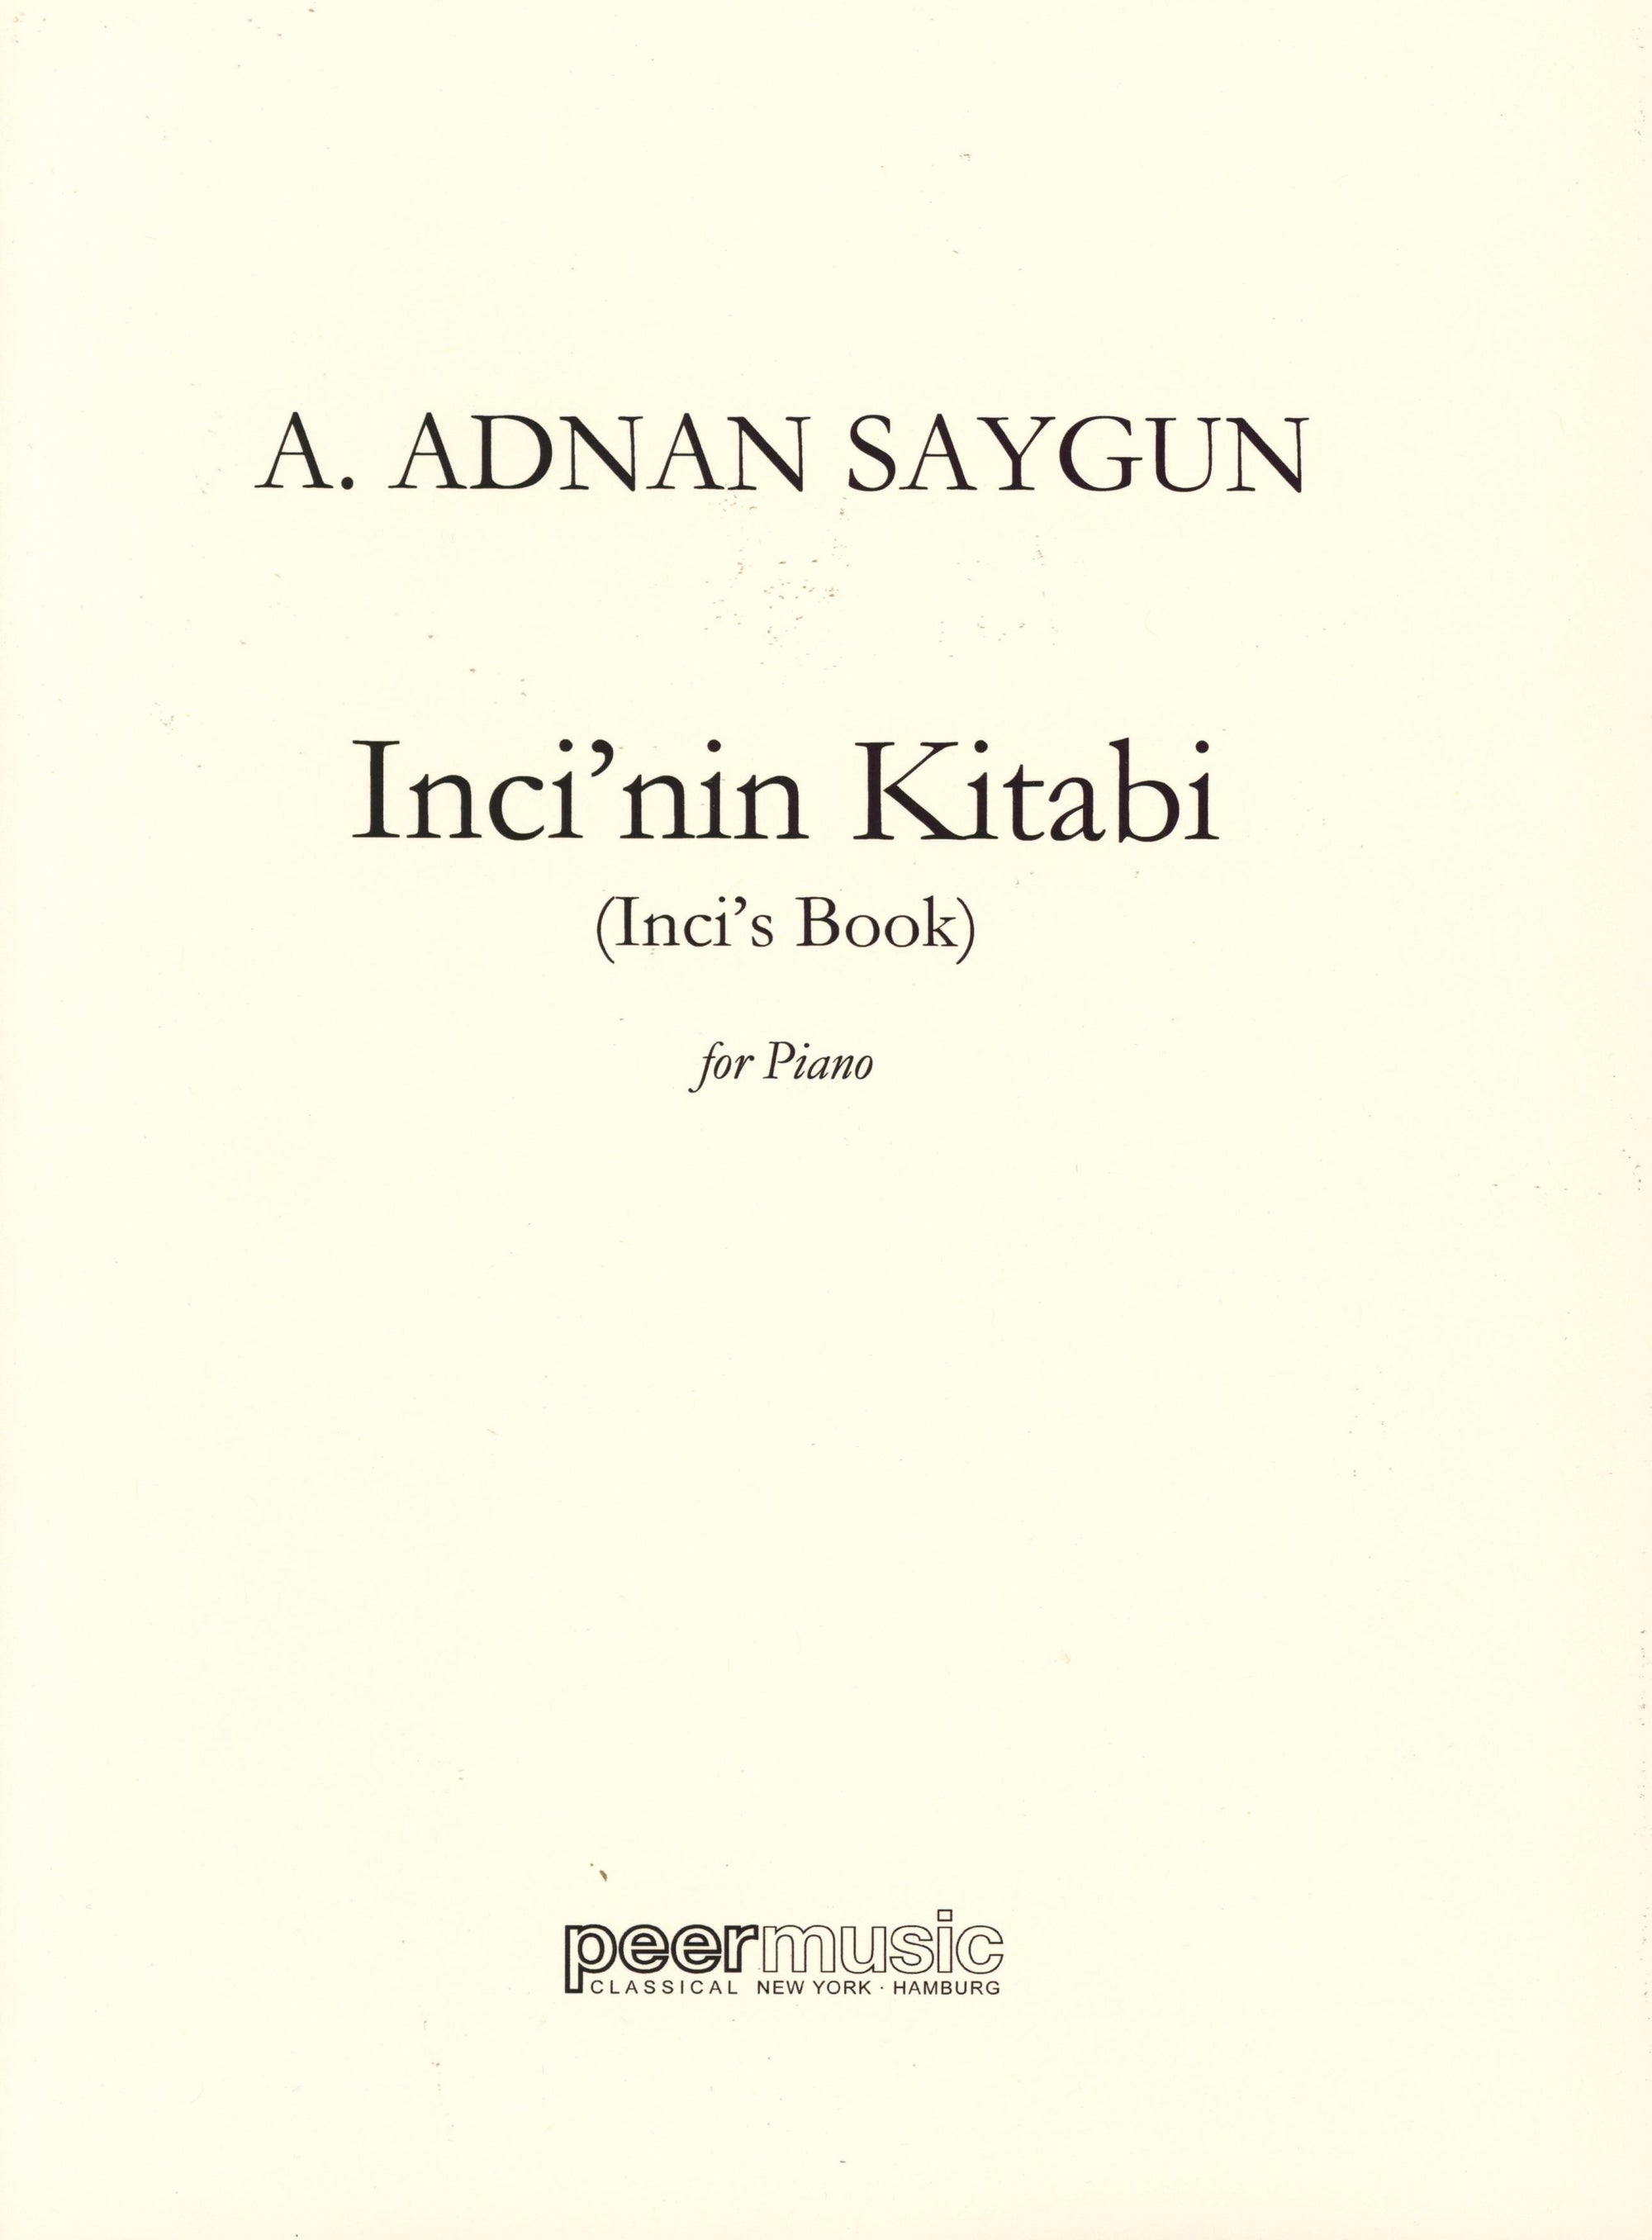 Saygun: Inci'nin Kitabi (Inci's Book), Op. 10